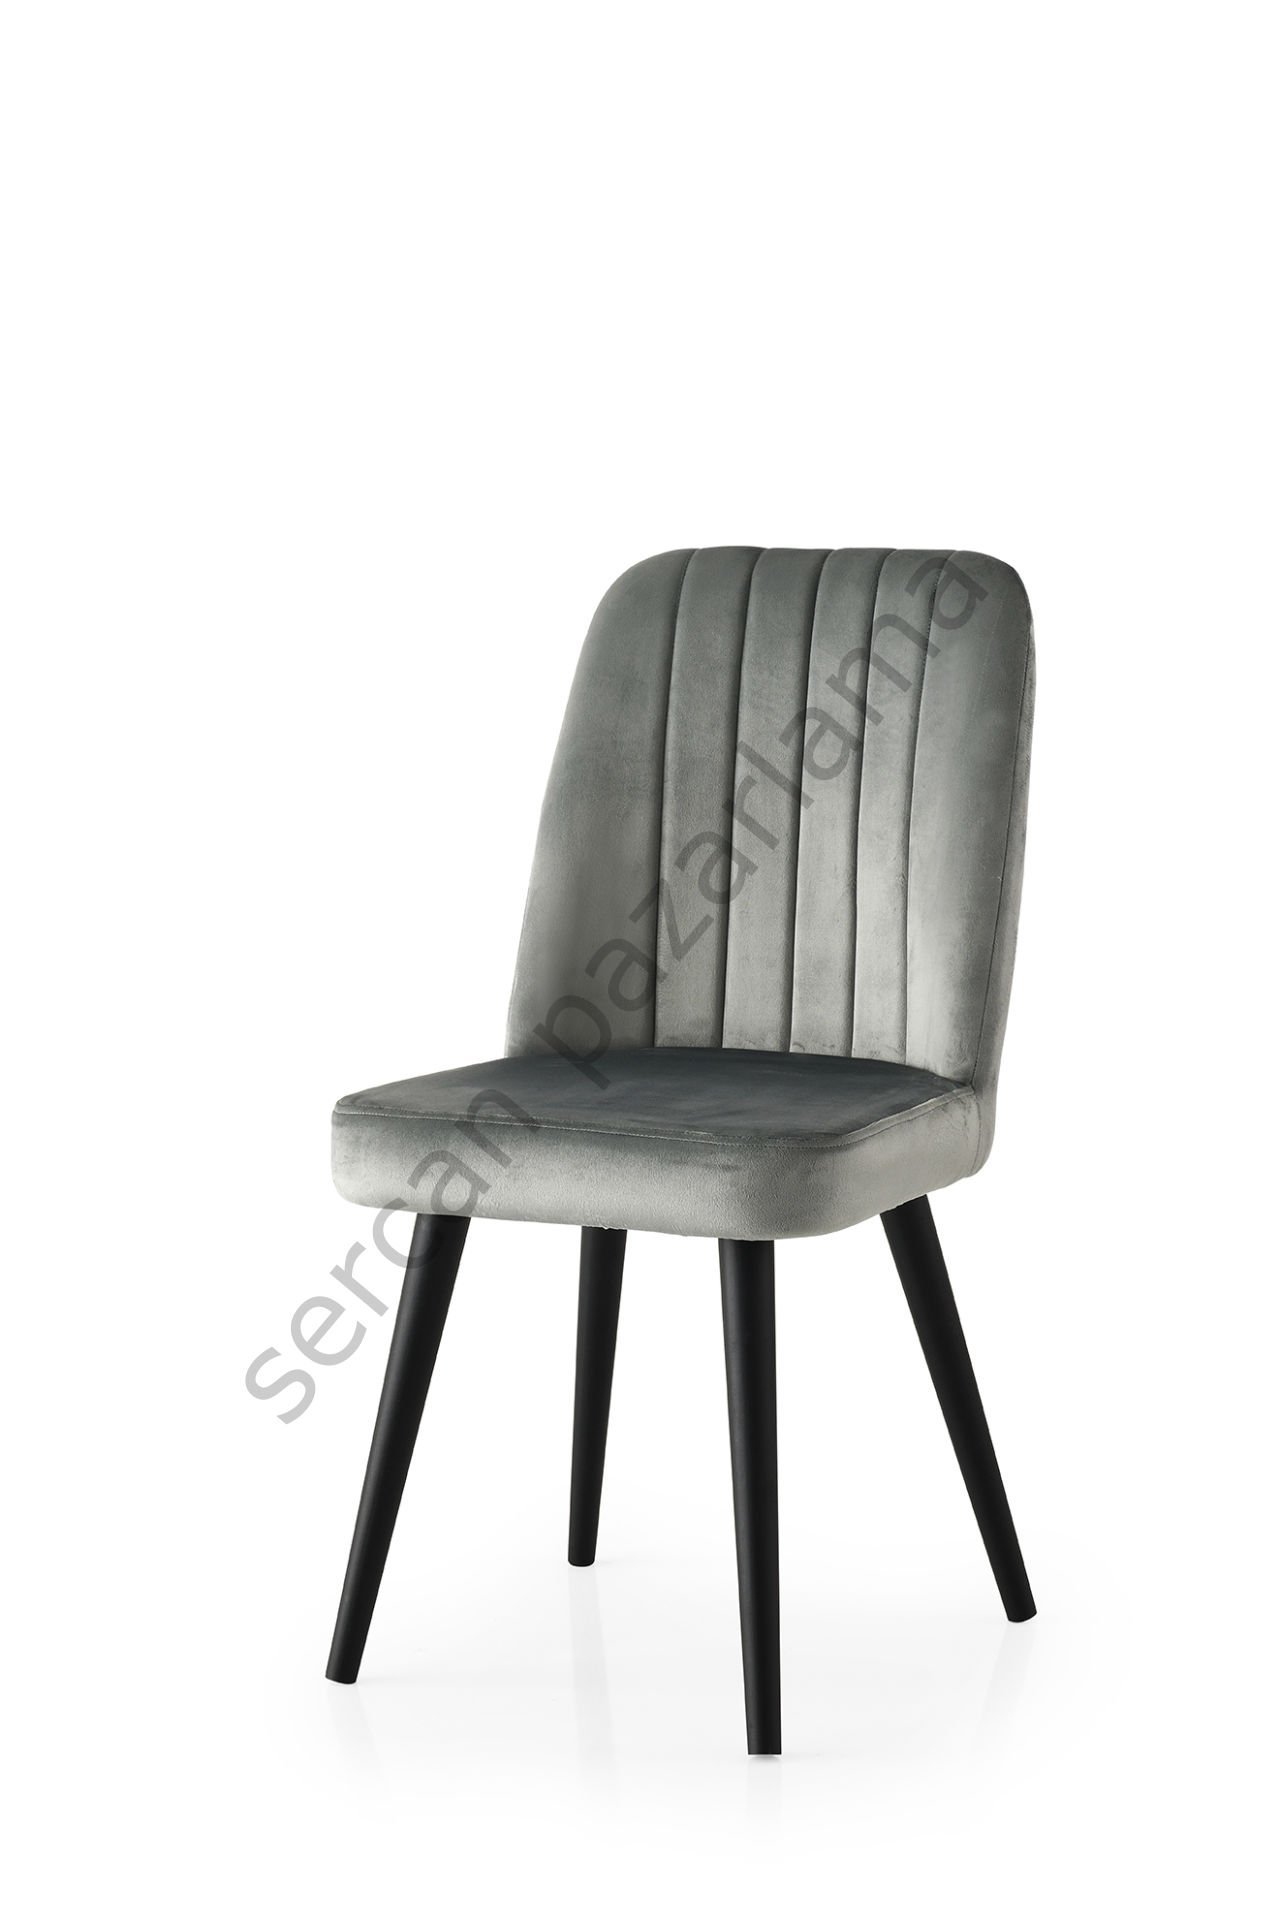 2392 - Sude Sandalye - Gri/Siyah